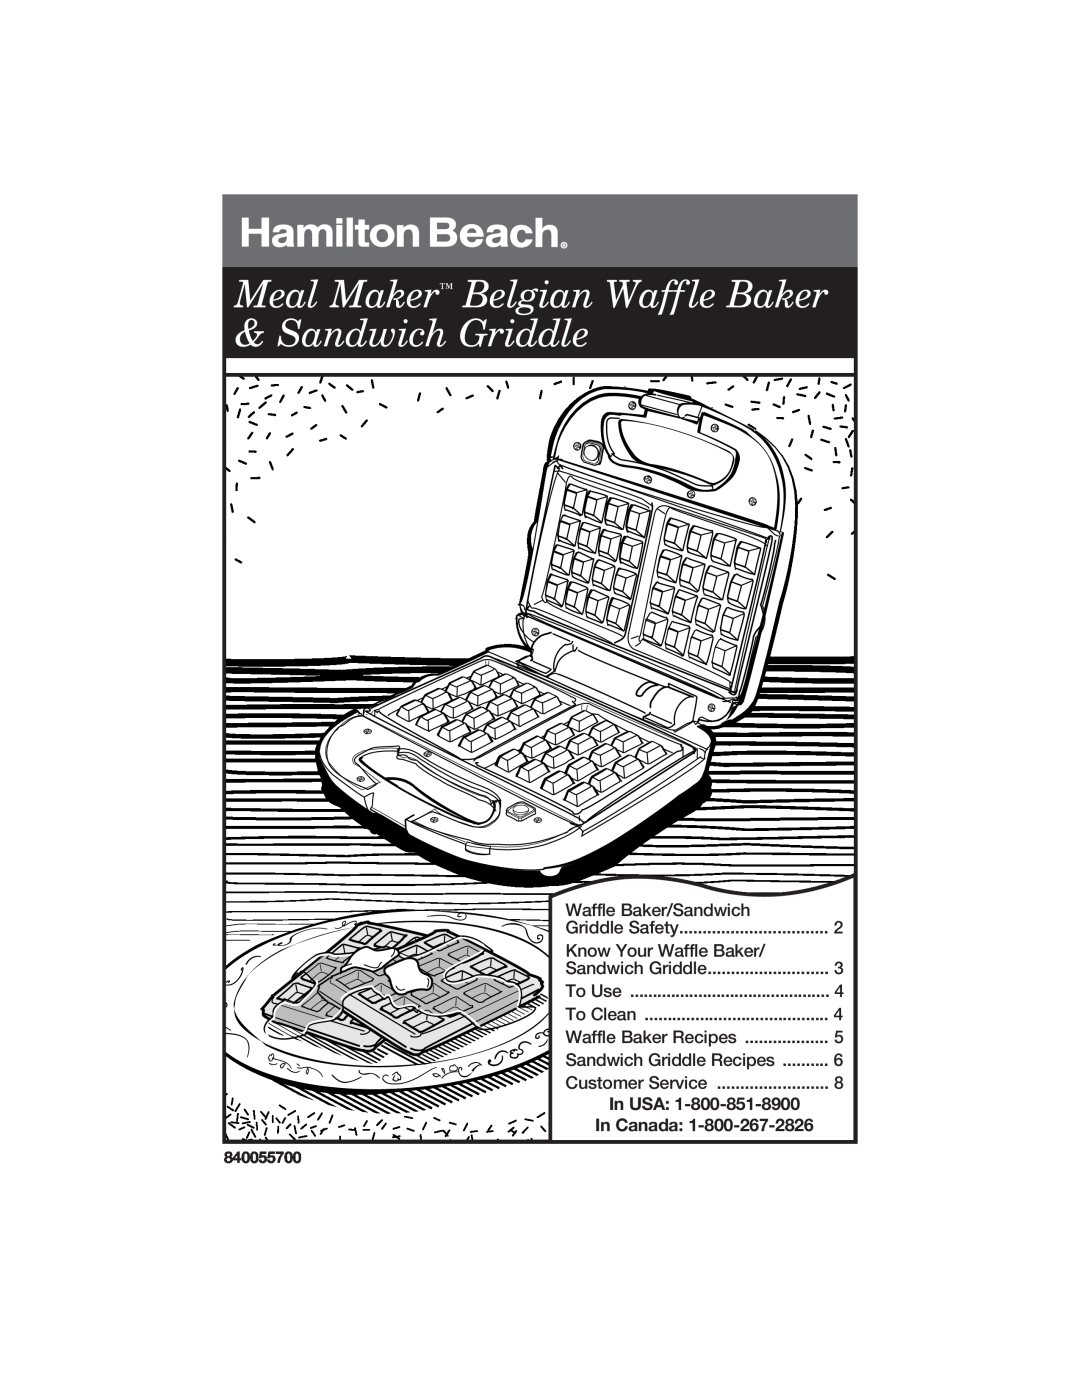 Hamilton Beach 840055700 manual In USA, In Canada, Waffle Baker/Sandwich, Know Your Waffle Baker, Sandwich Griddle Recipes 